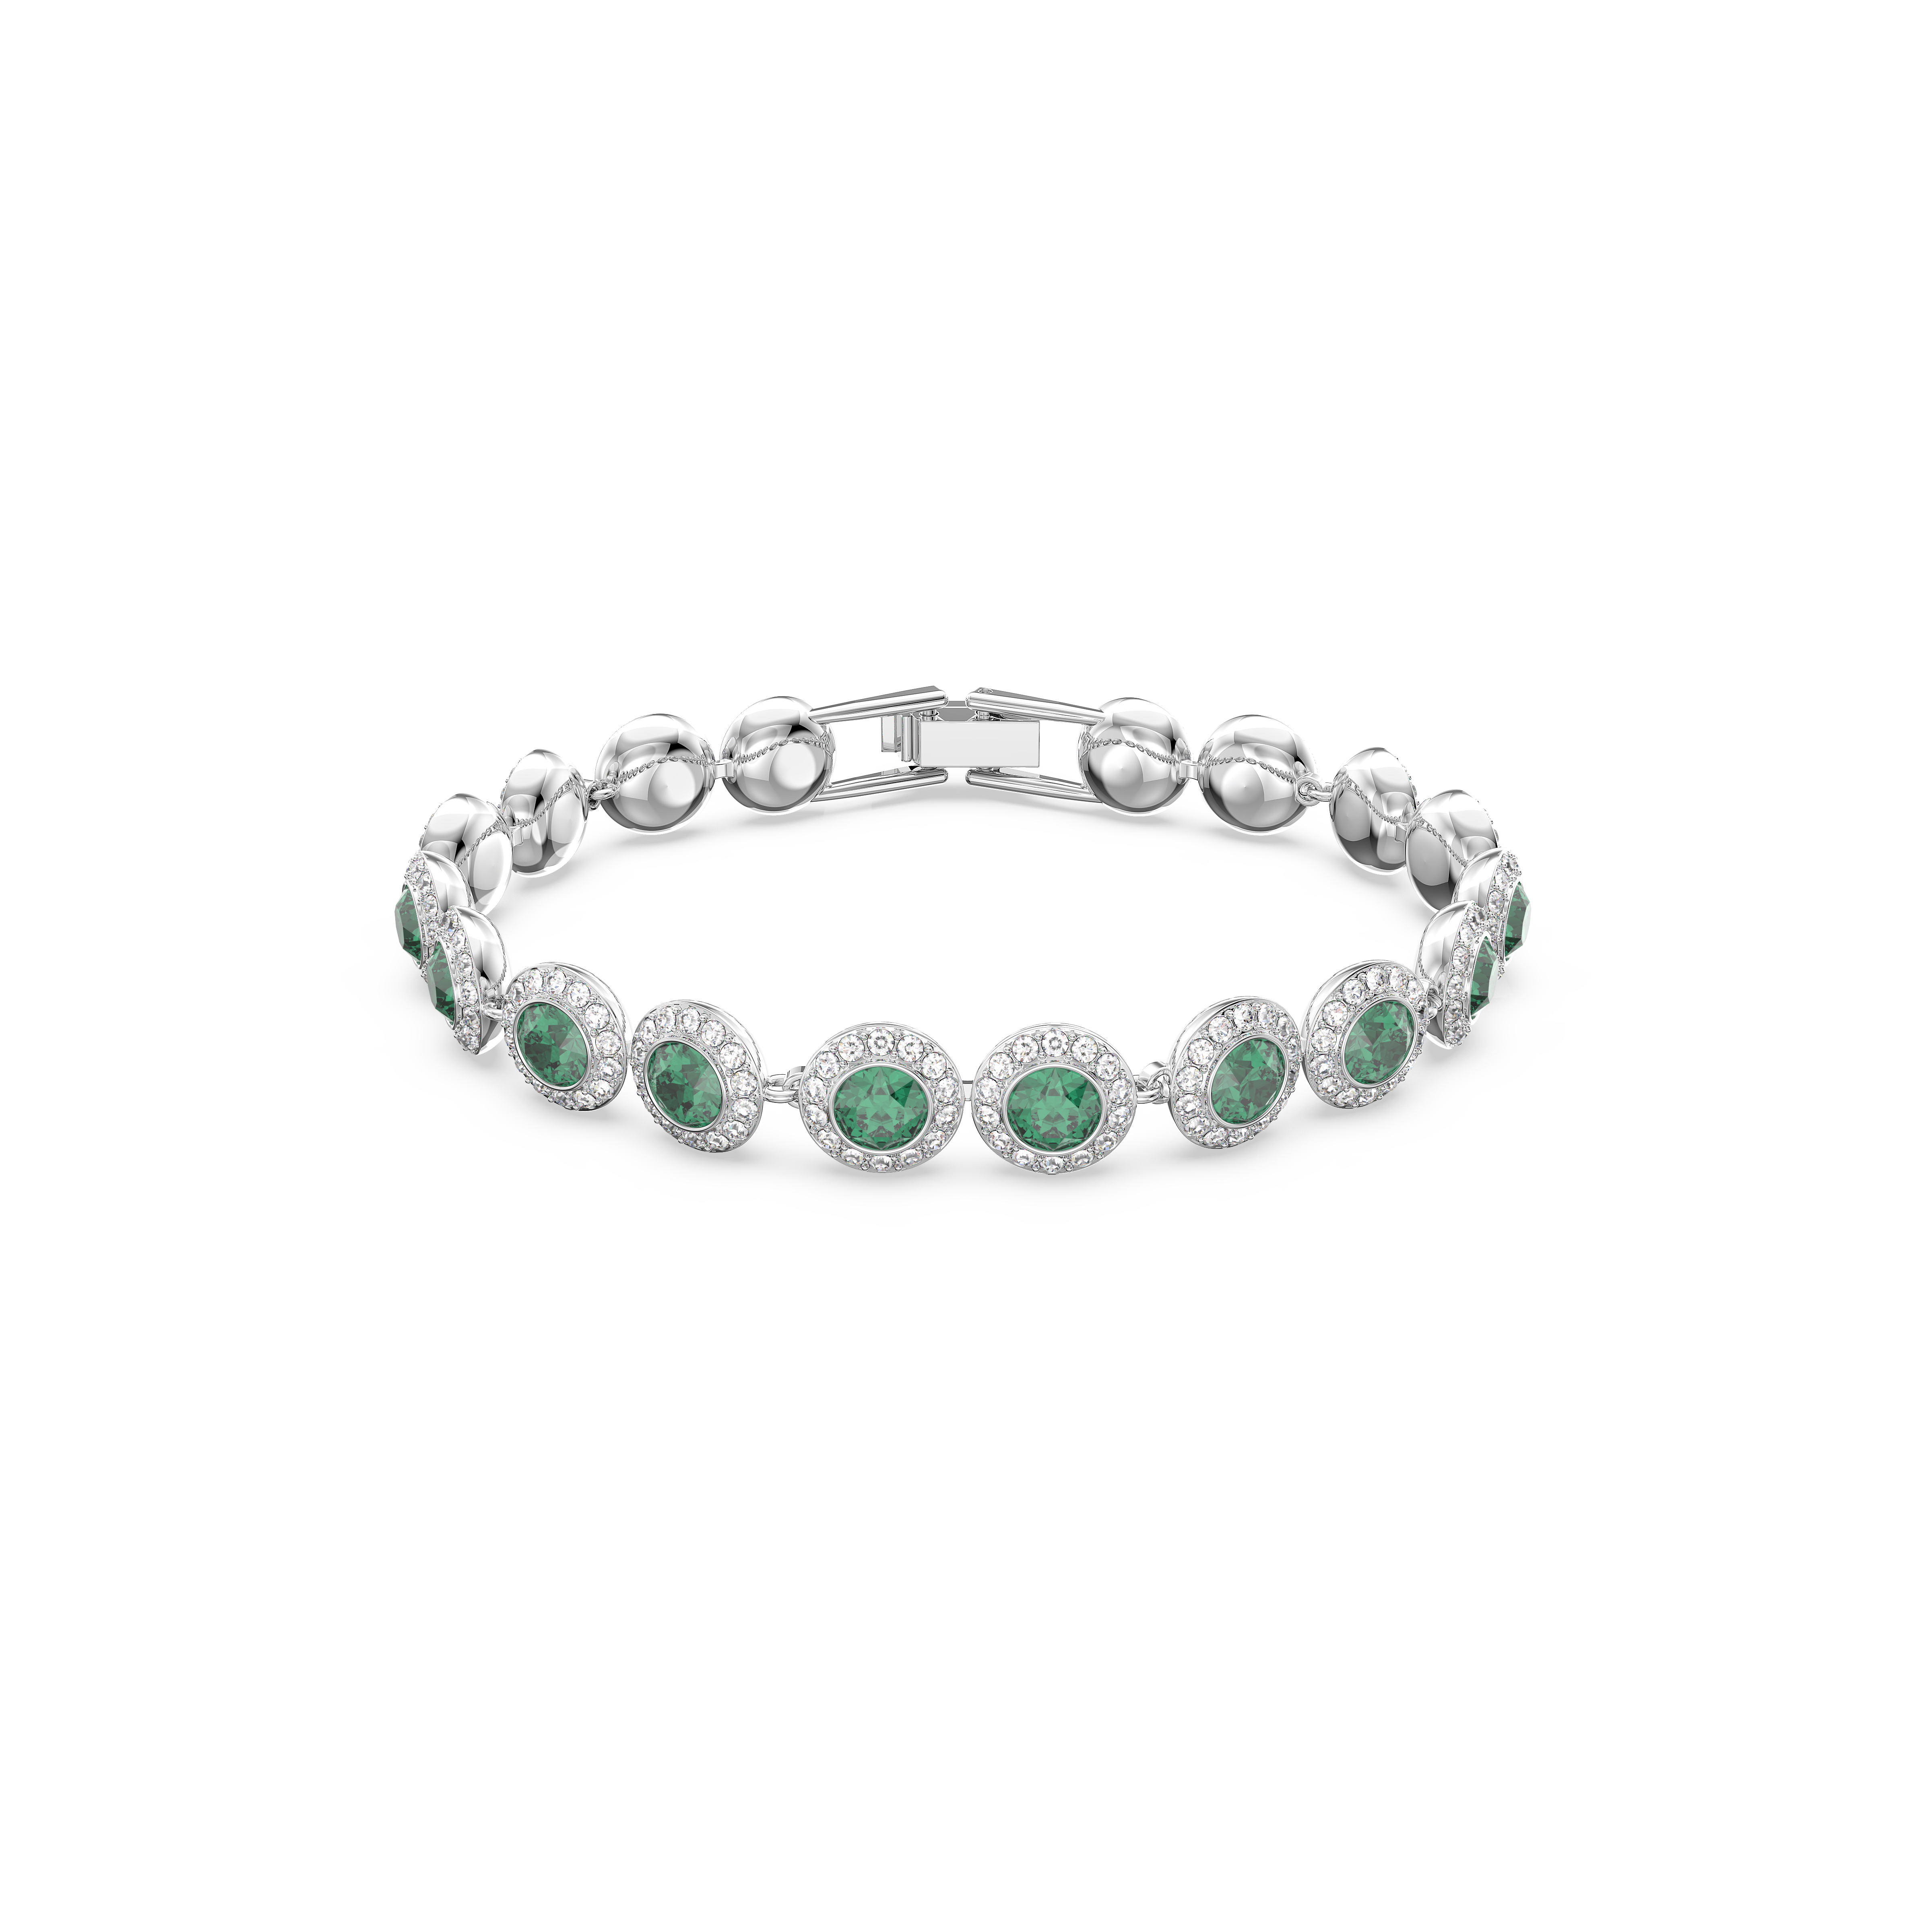 Angelic bracelet, Round cut, Pavé, Medium, Green, Rhodium plated by SWAROVSKI